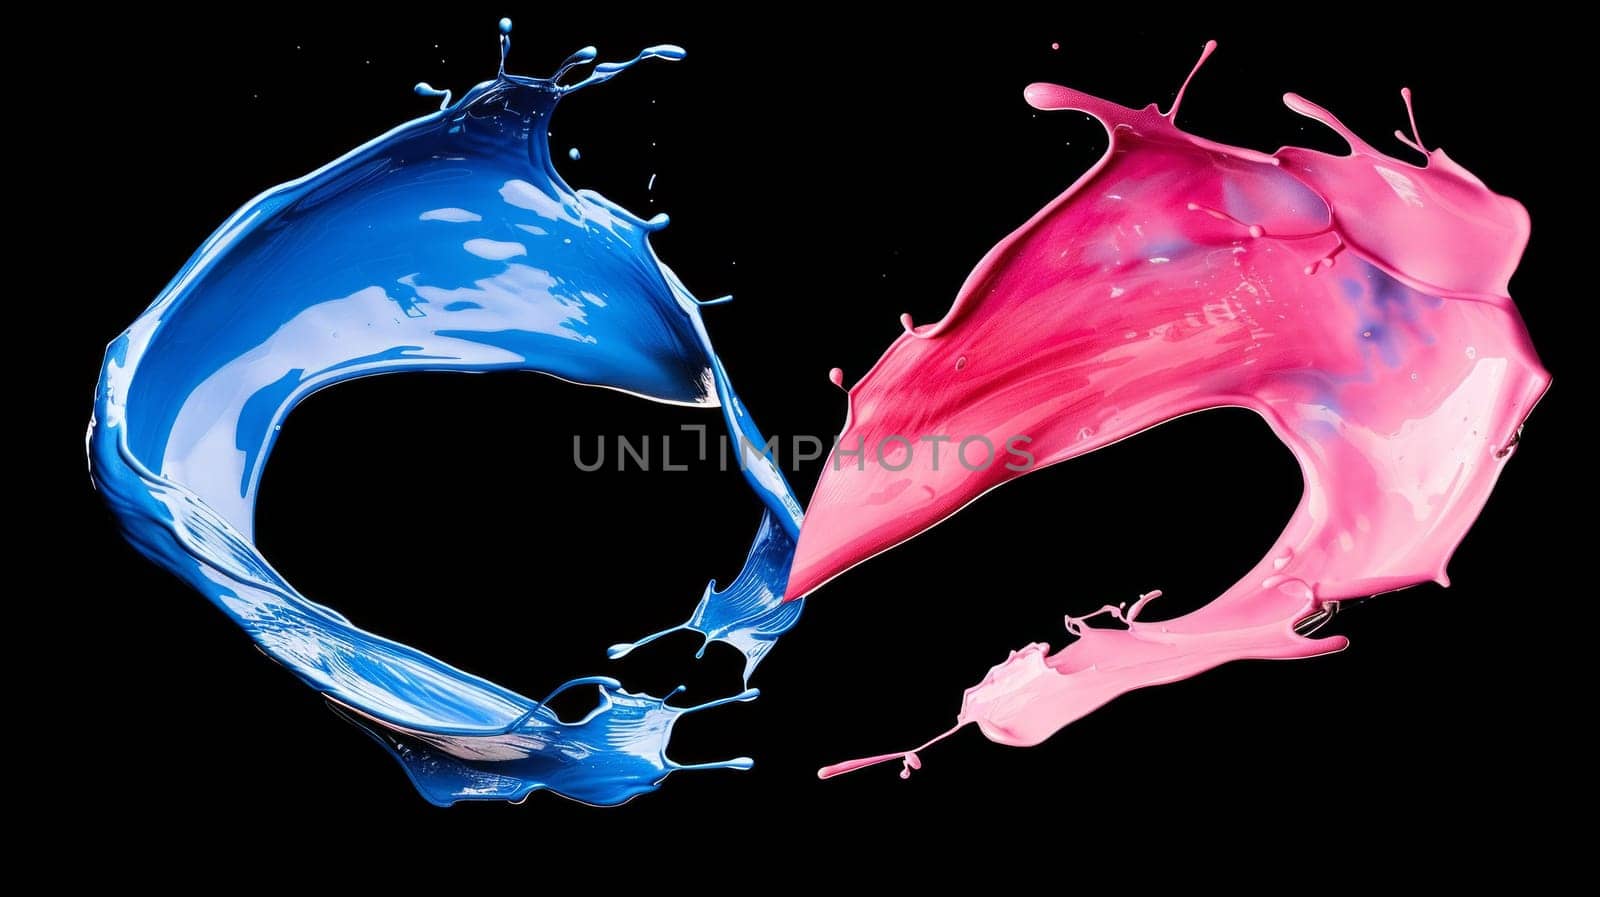 Two vibrant colored liquids collide, creating a mesmerizing splash, set against a deep black backdrop.